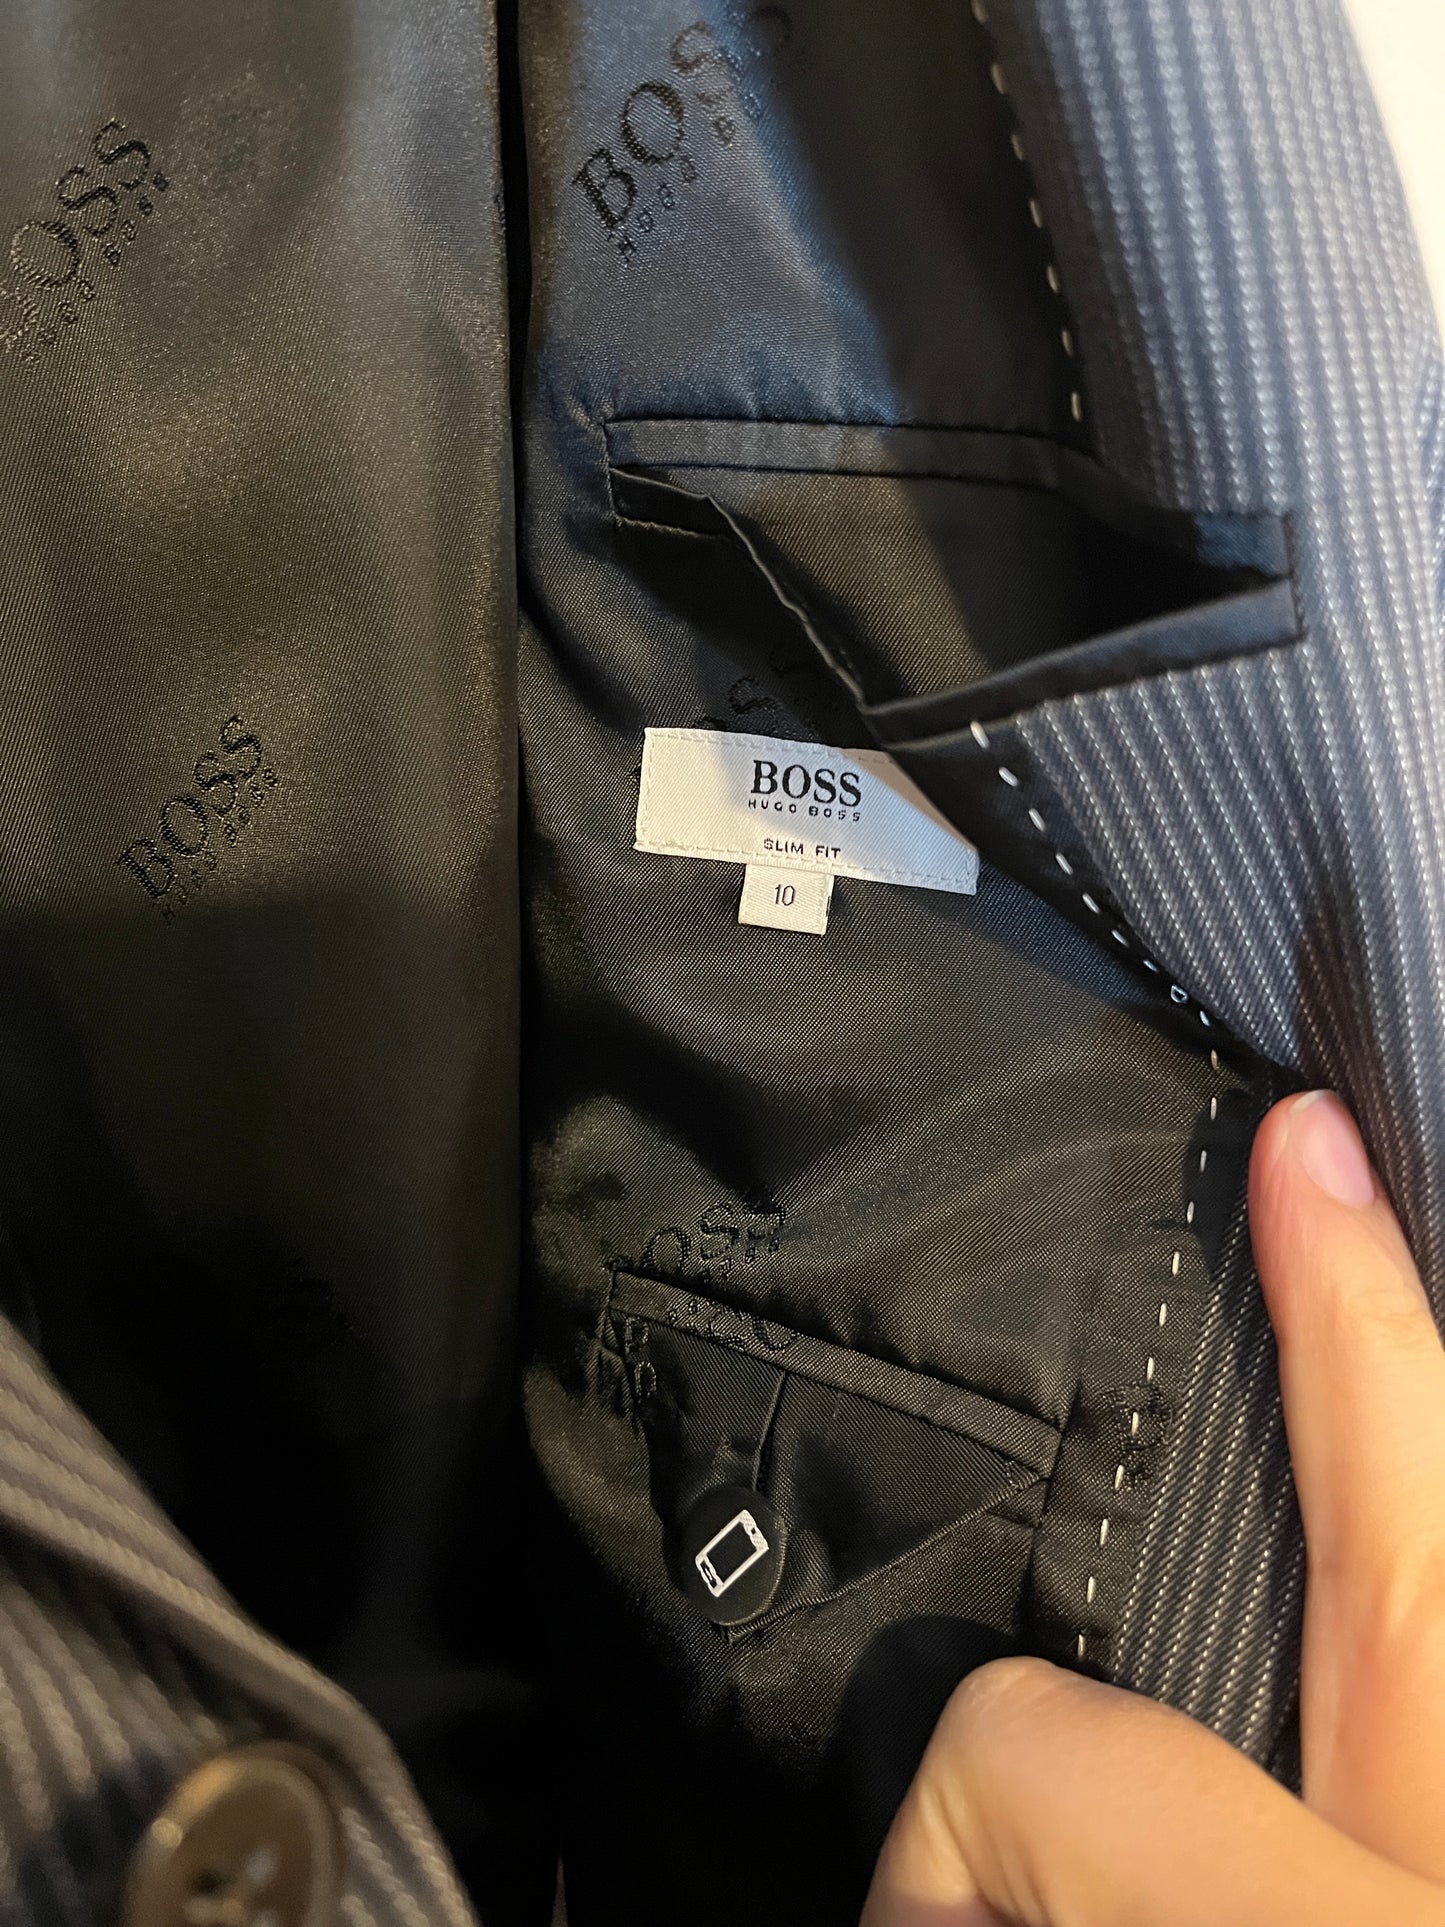 Hugo Boss Pinstripe Suit Jacket (10)